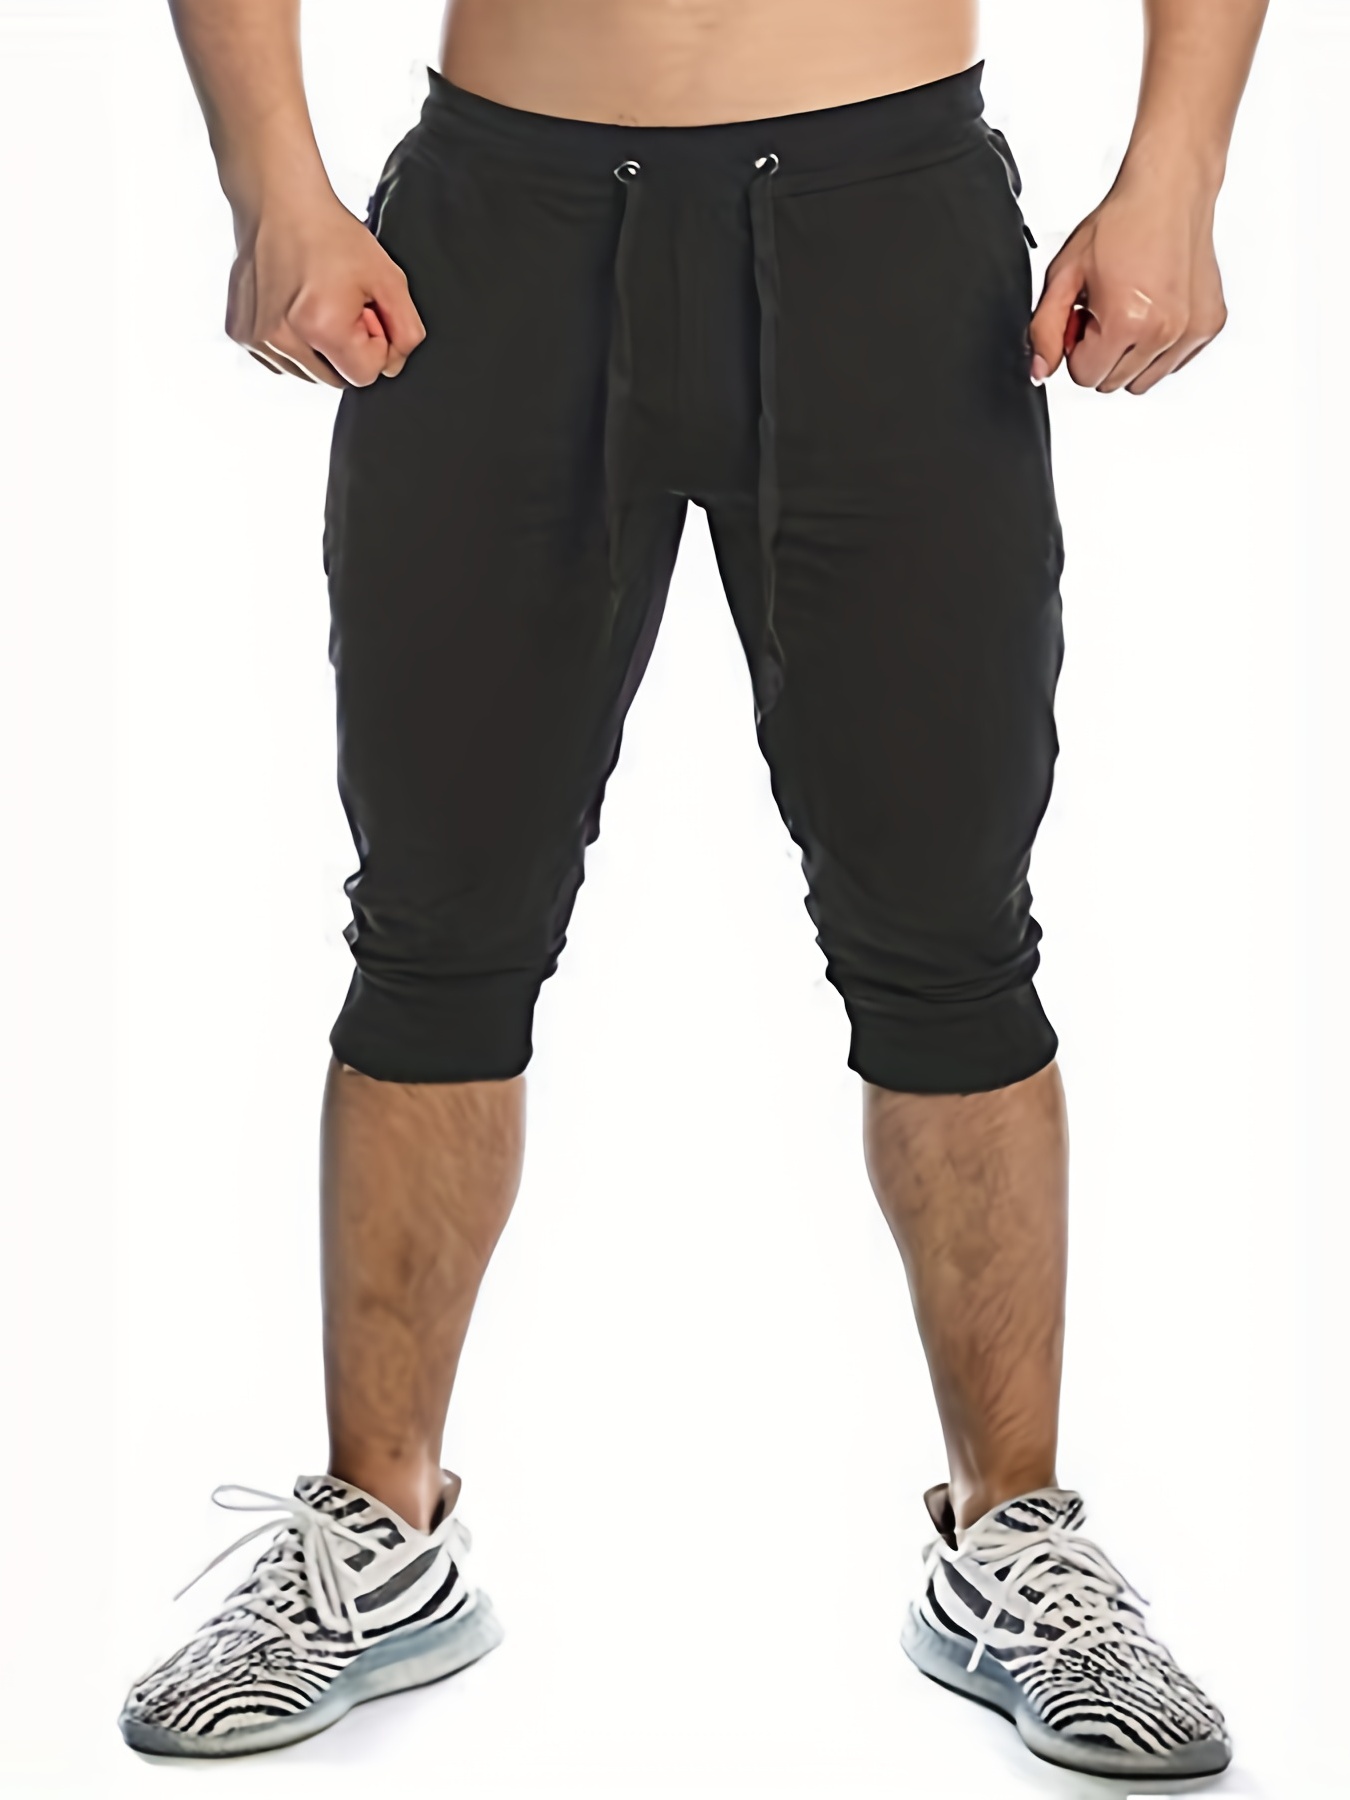 Men's Cotton Casual shorts 3/4 Jogger Capri Pants Breathable Below